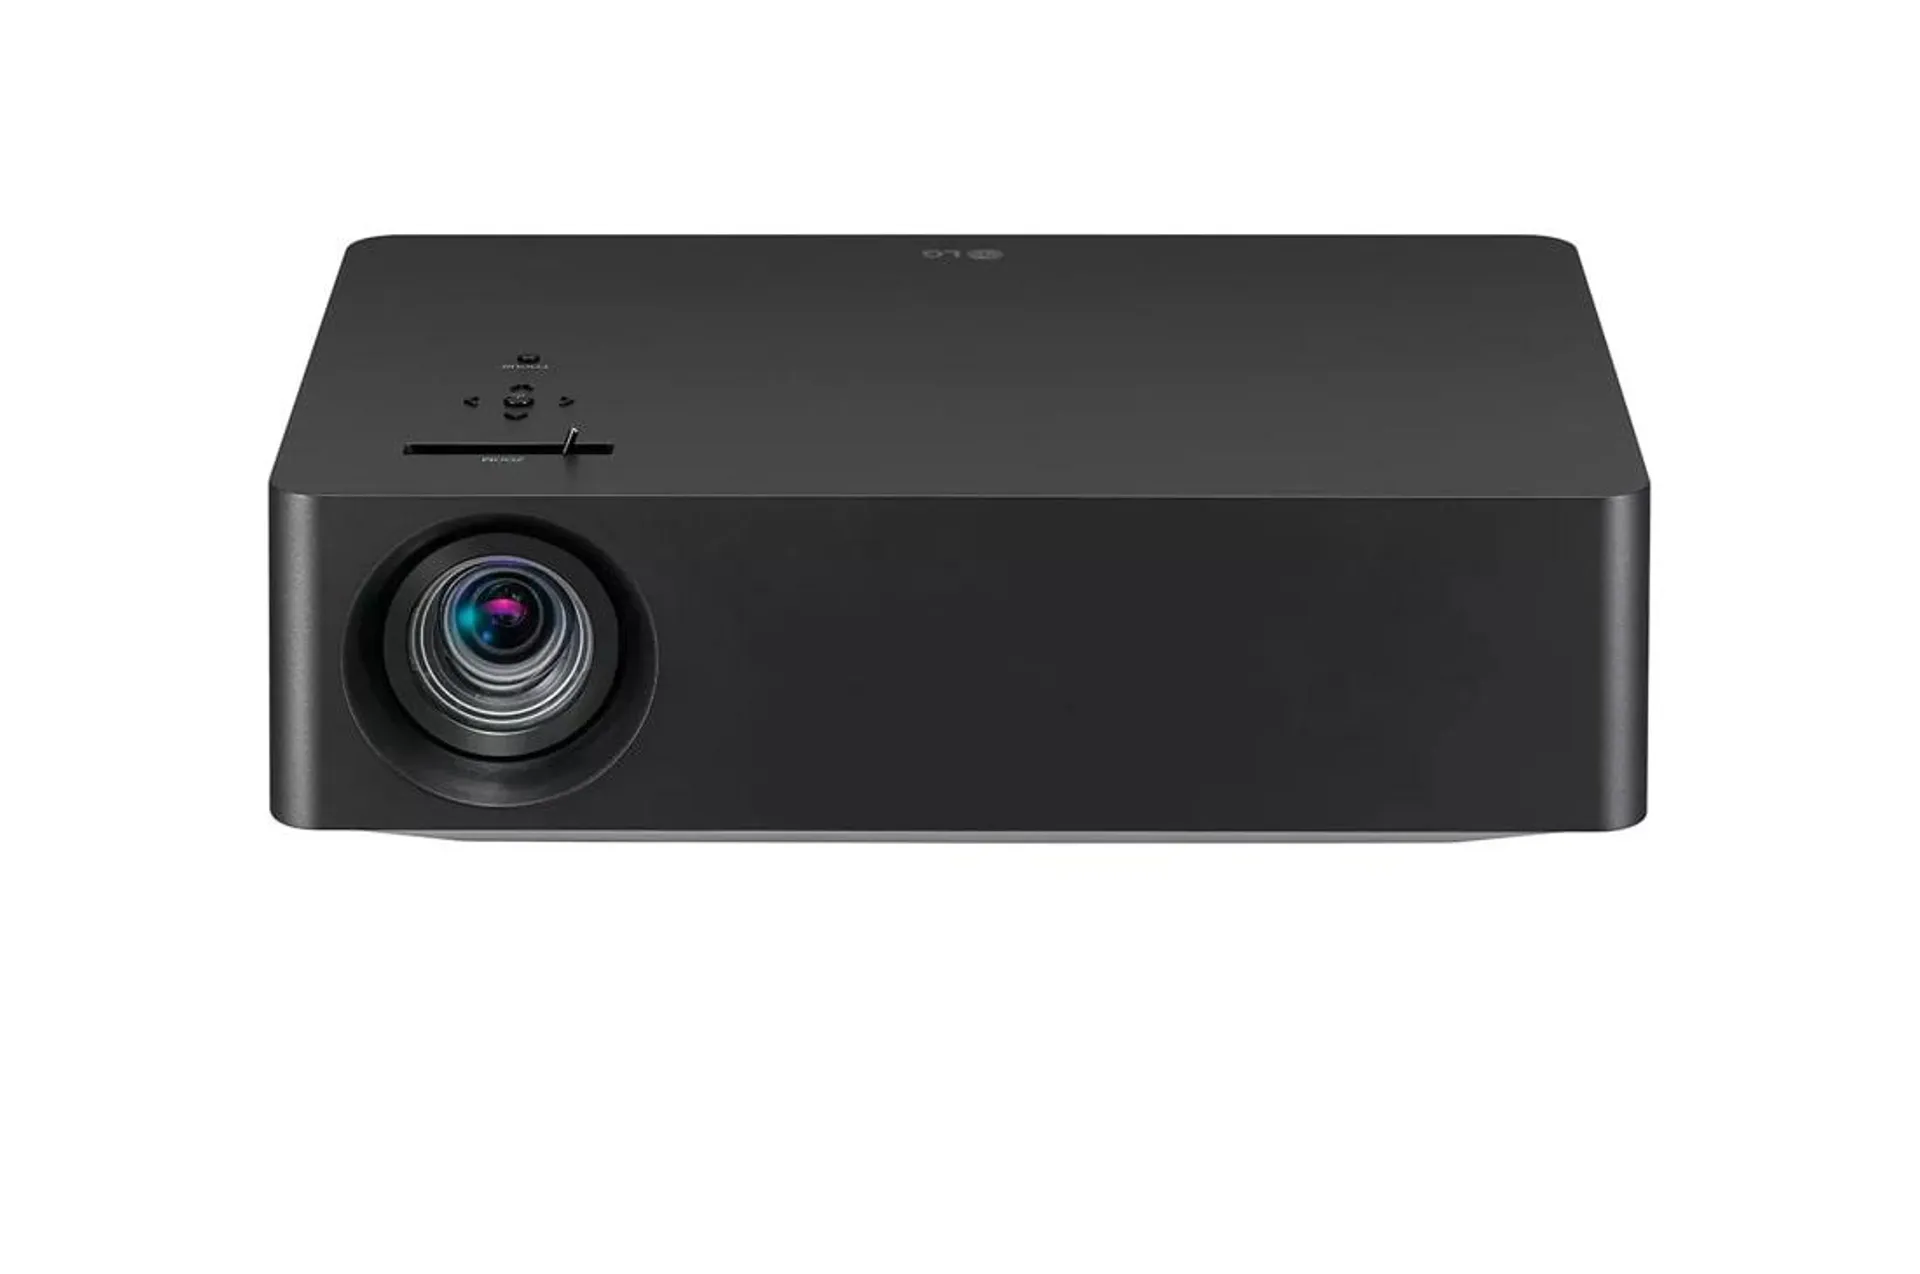 LG HU70LAB 4K UHD LED Smart Home Theater CineBeam Projector – Black